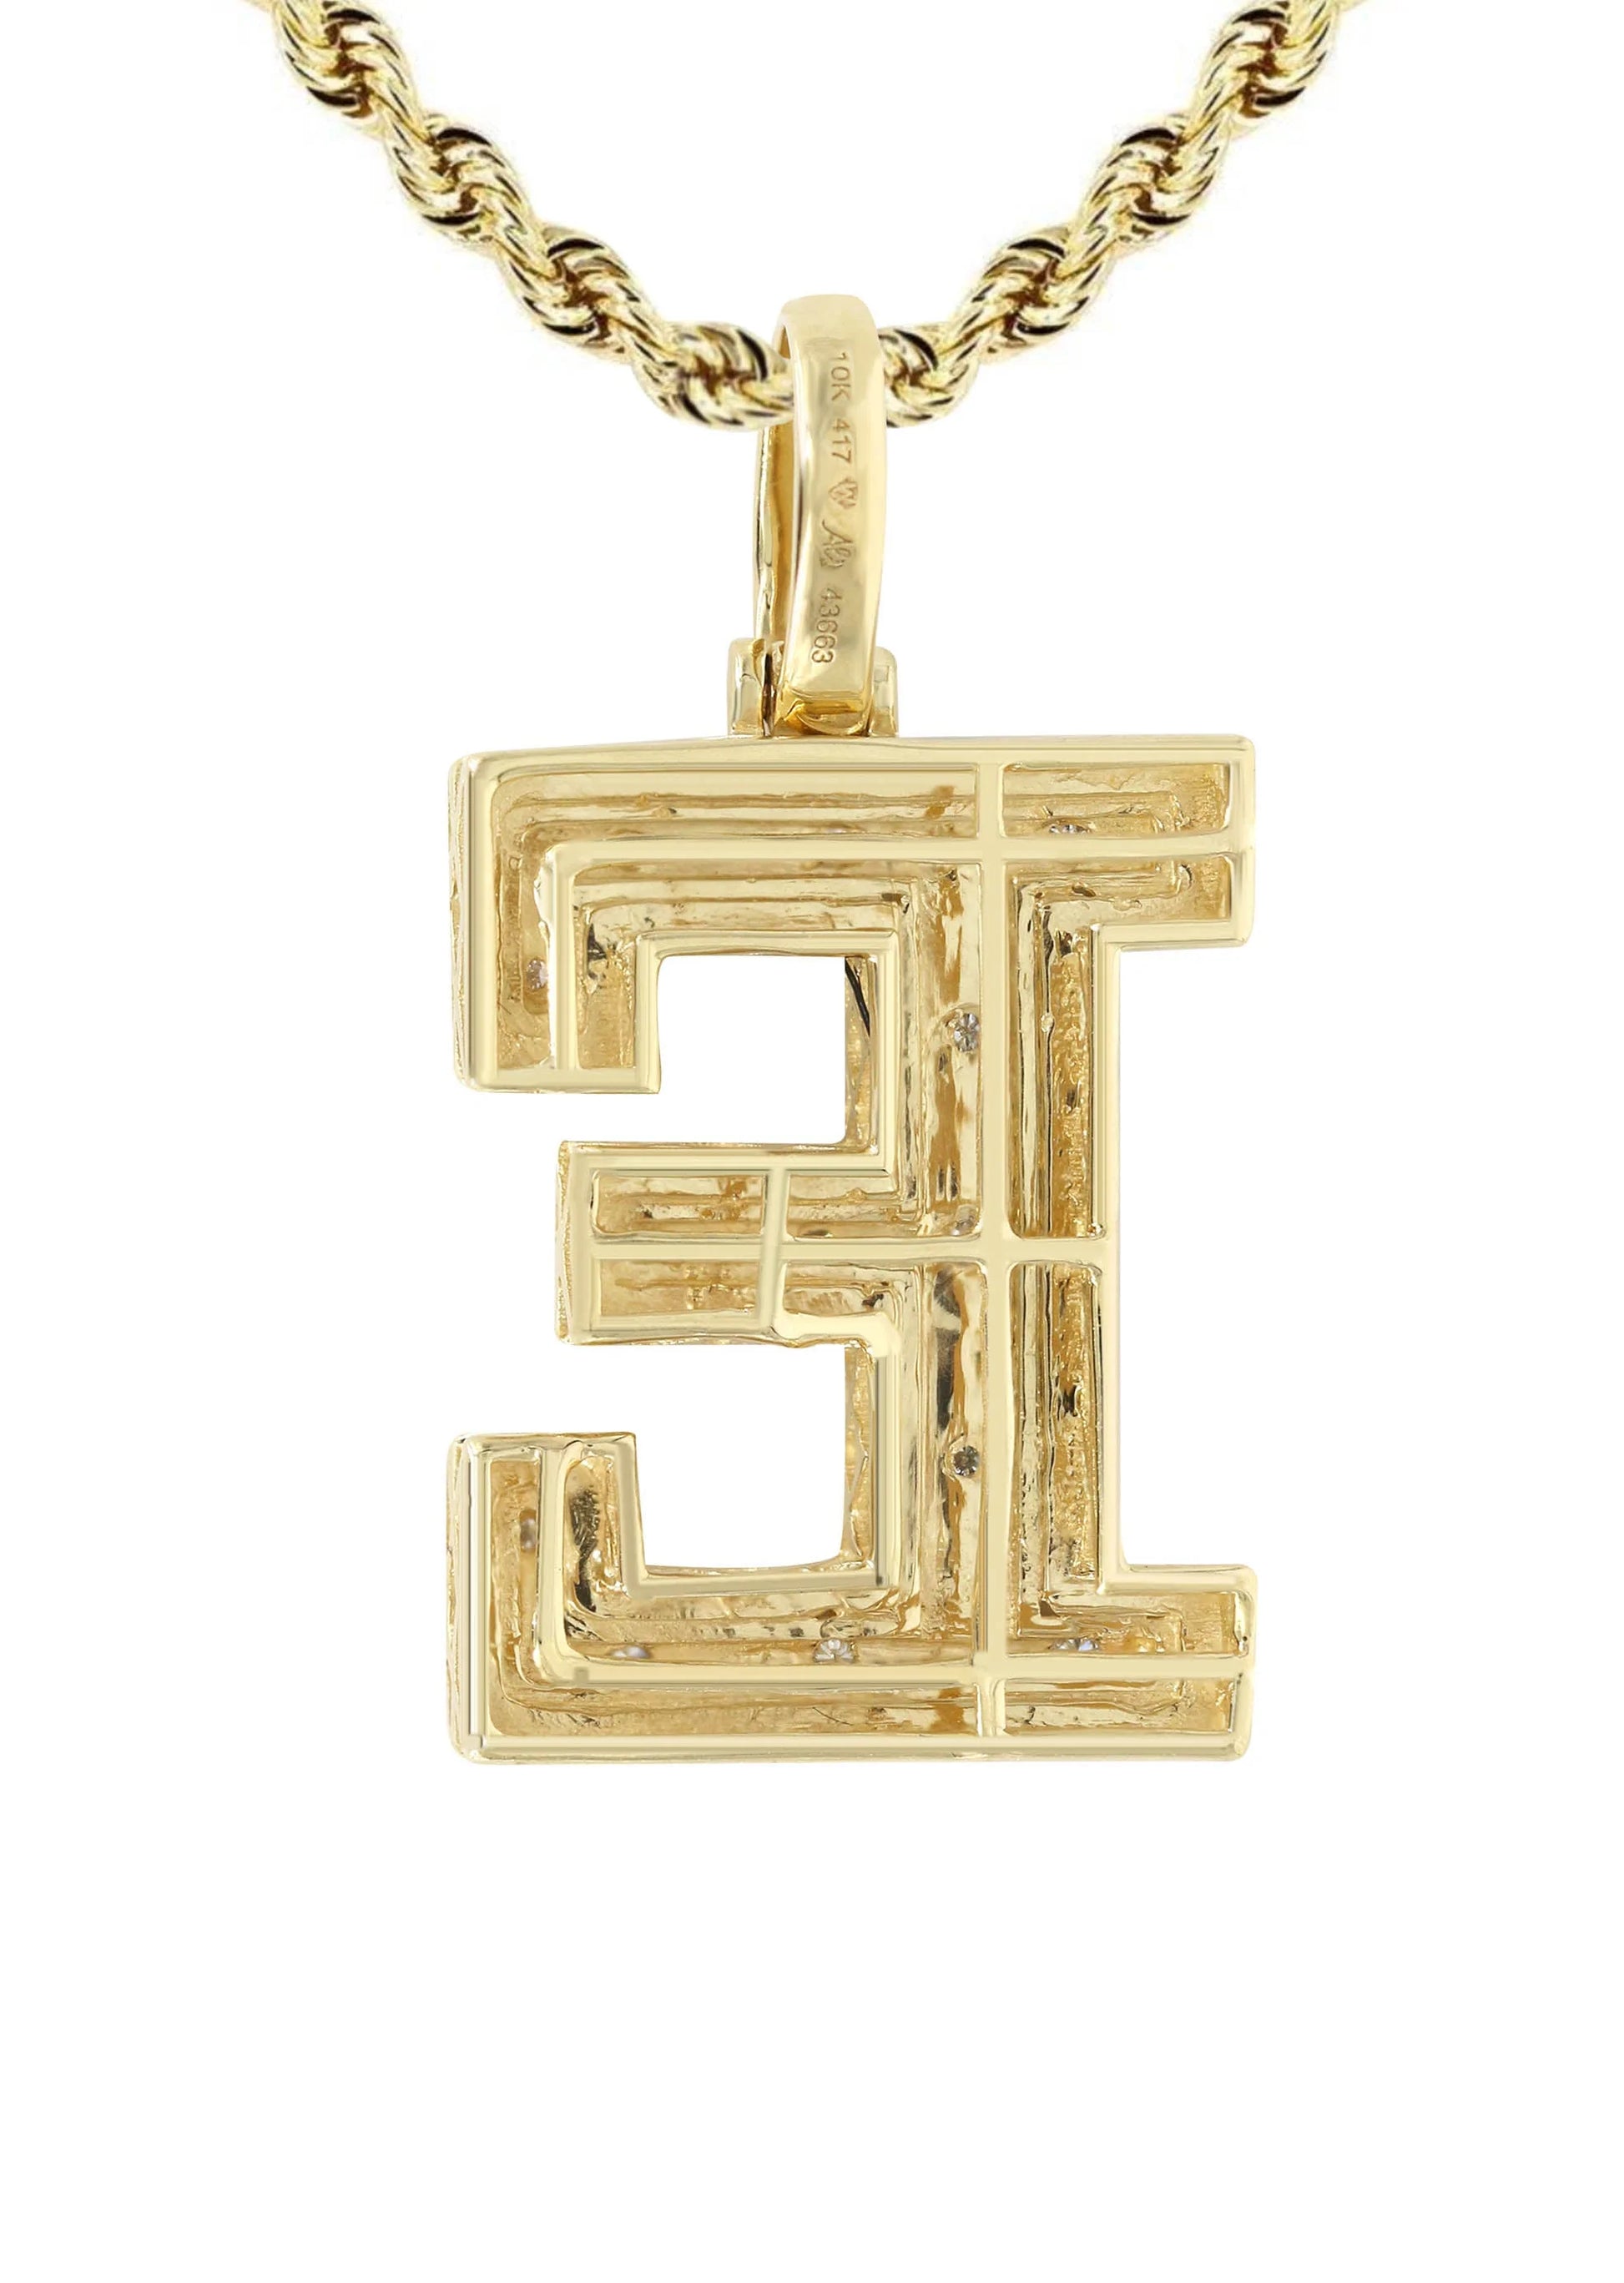 10k Yellow Gold Diamond Pendant Letter "E"